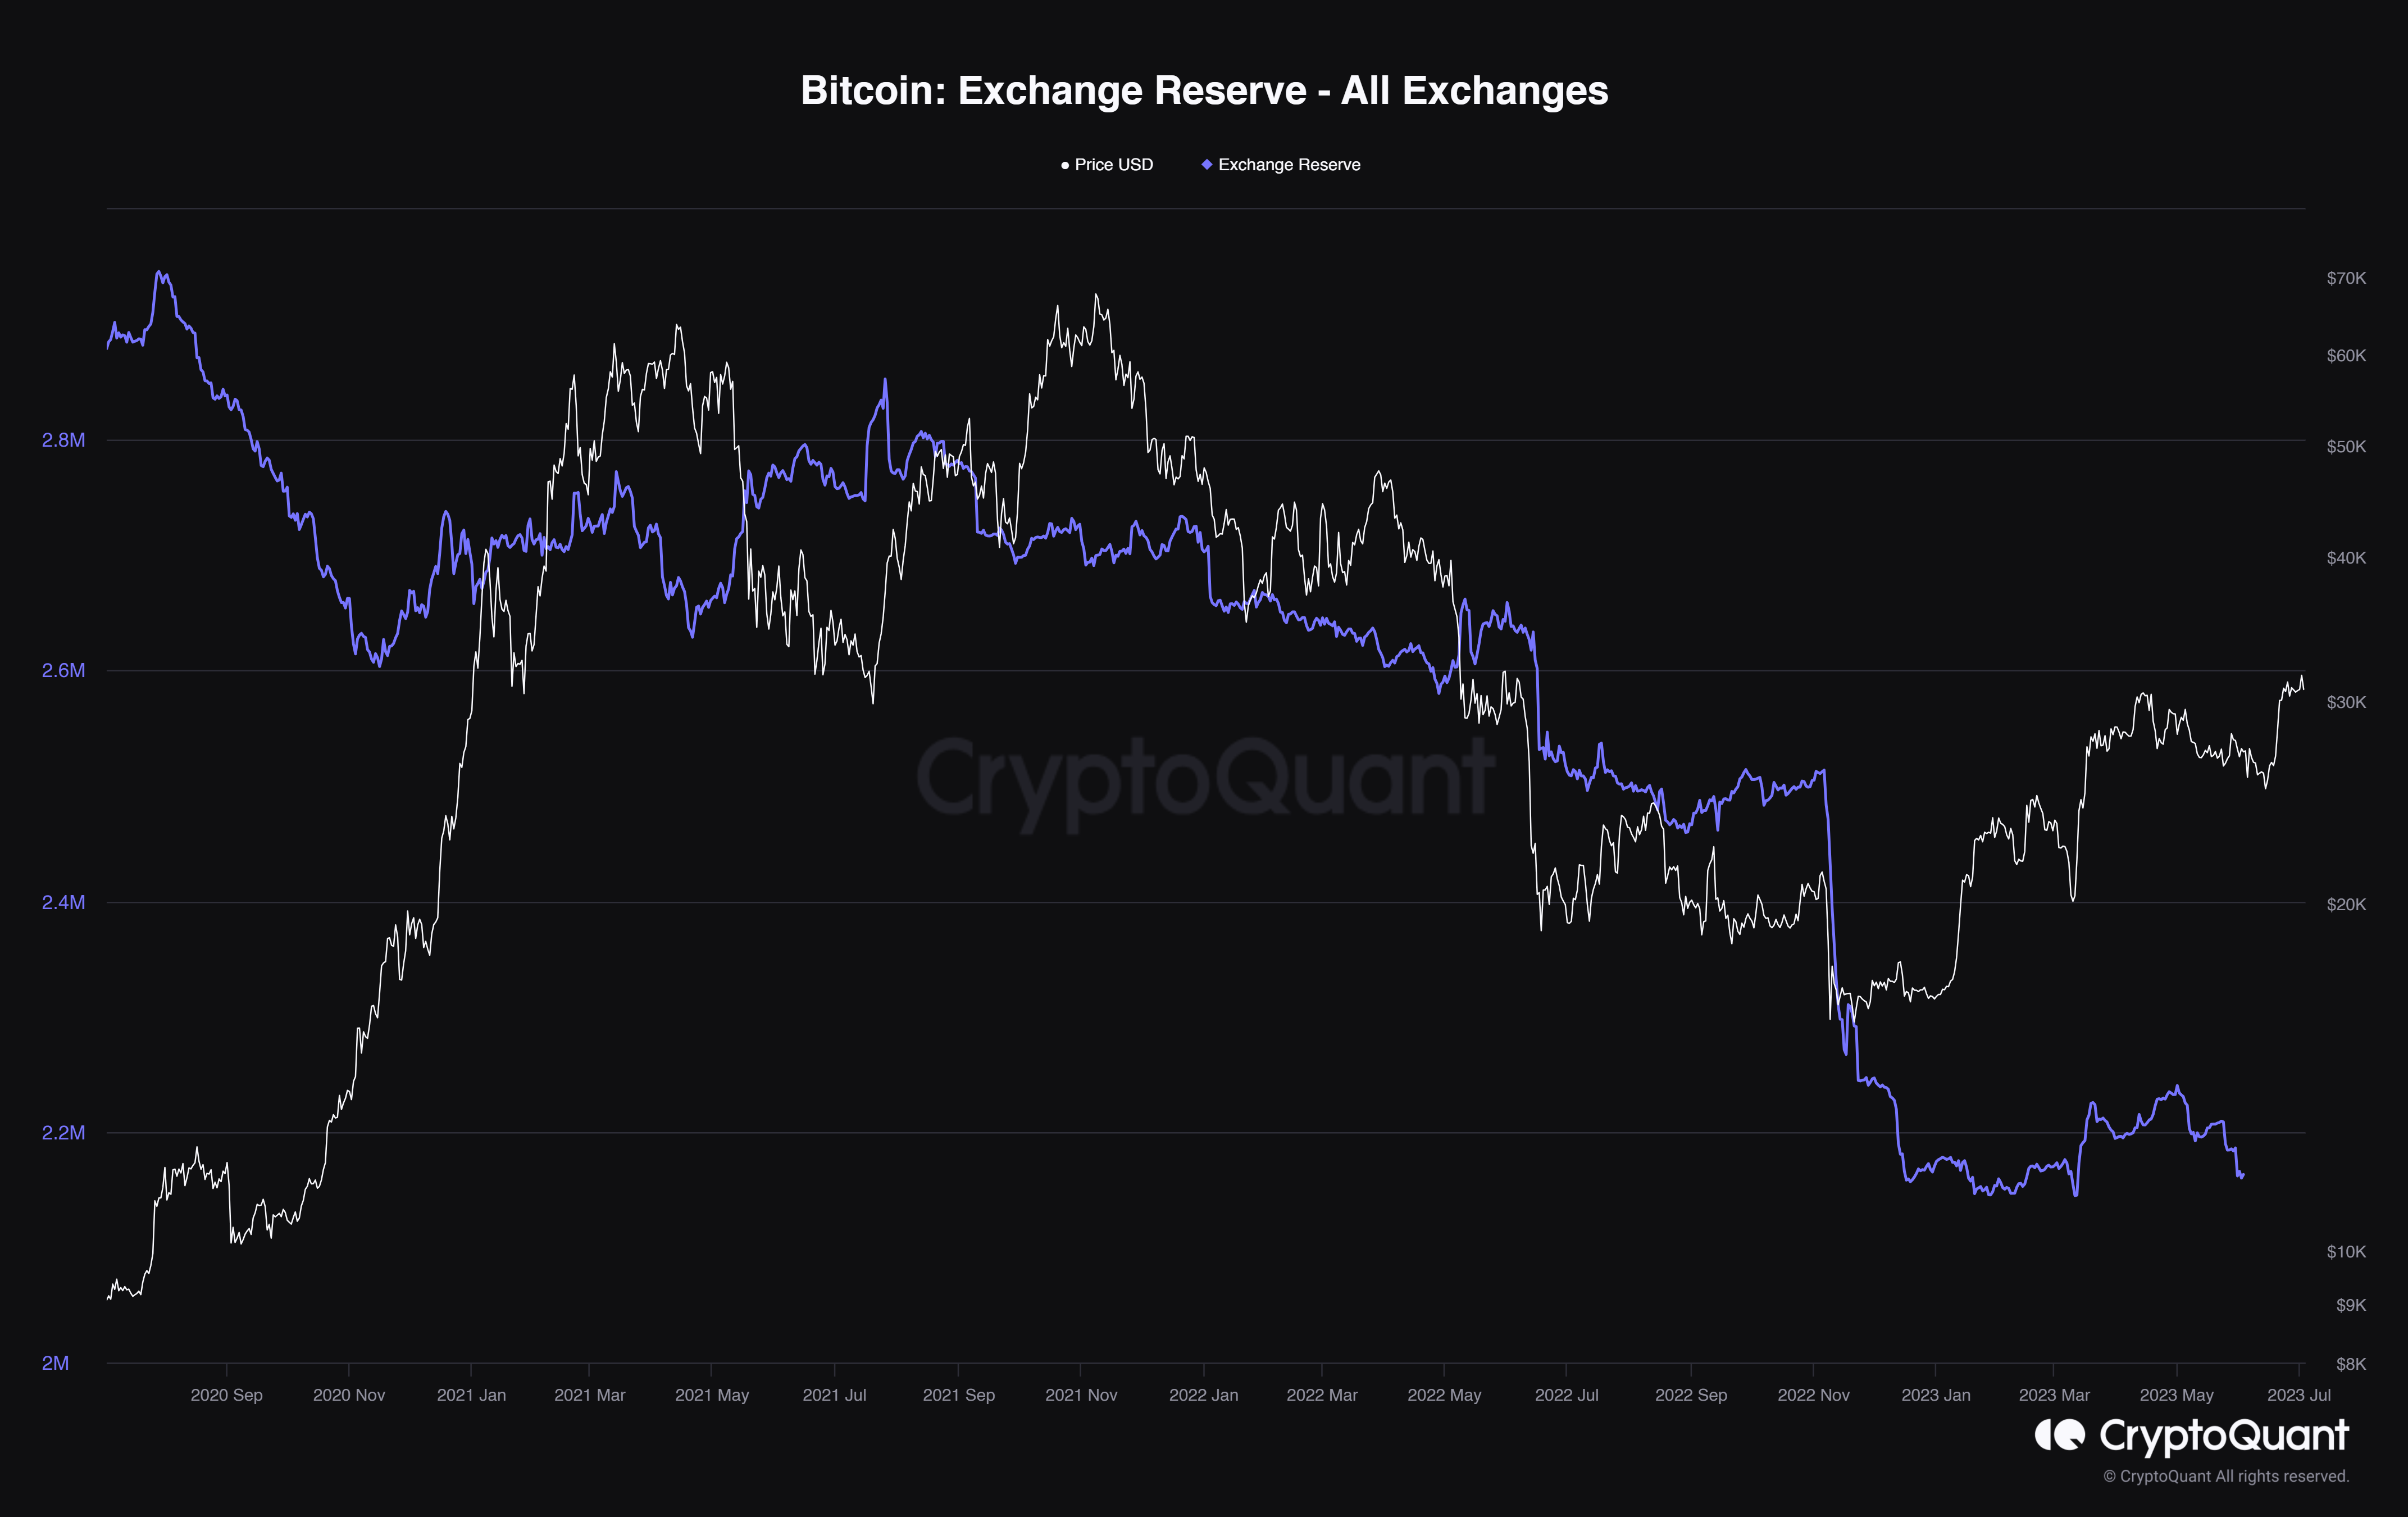 Bitcoin exchange reserves